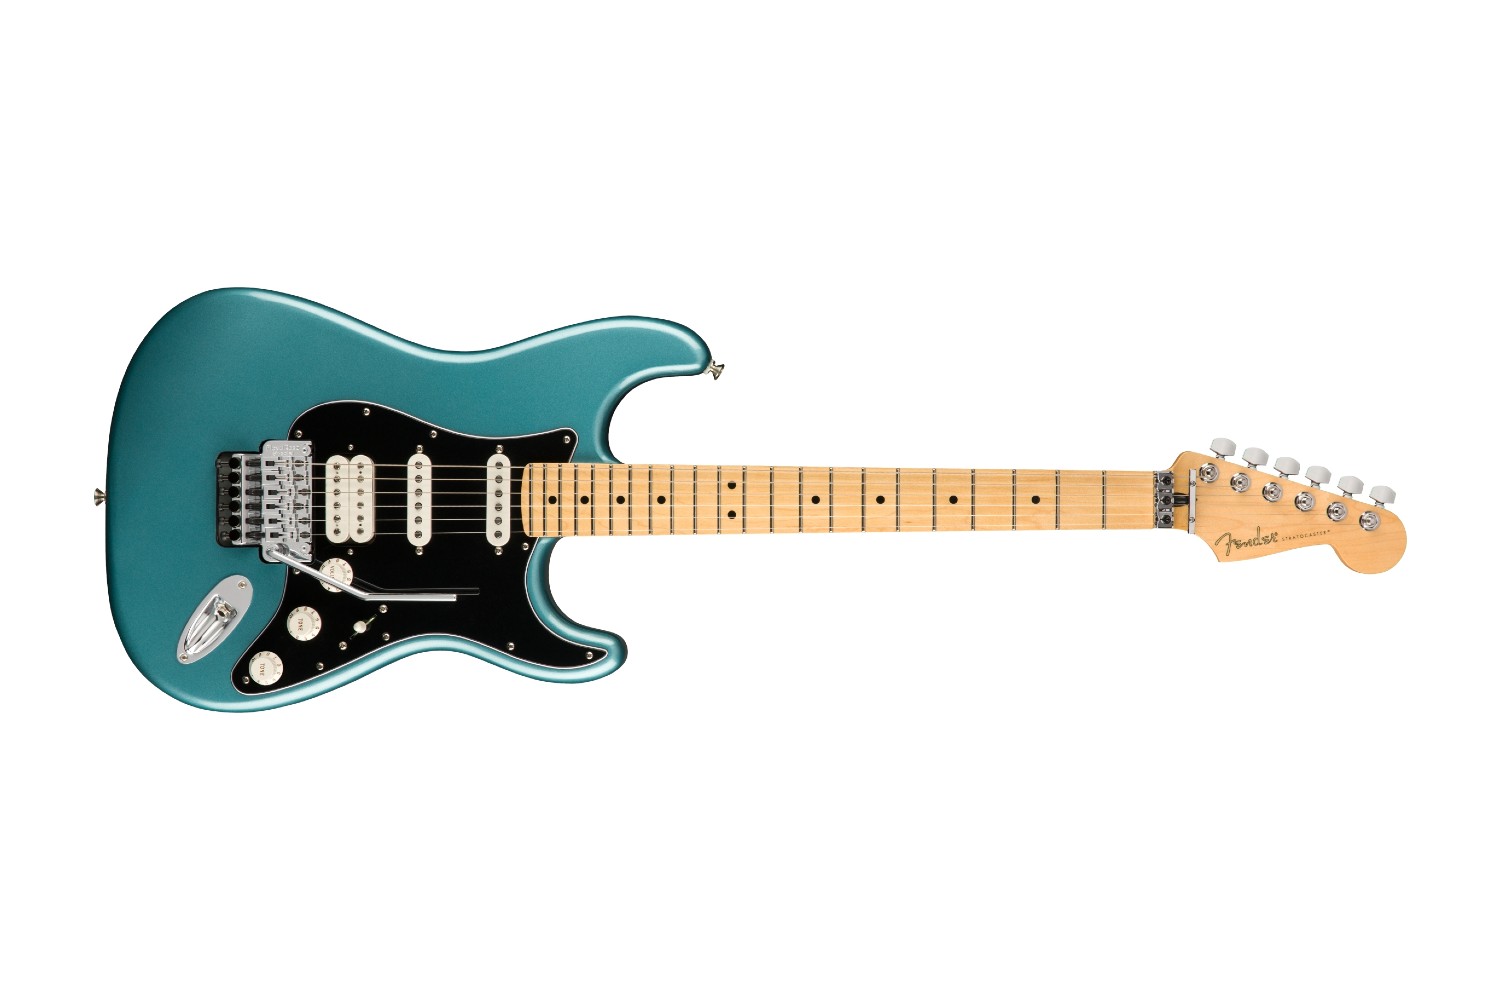 Fender Player stratocaster floyd rose HSS guitar